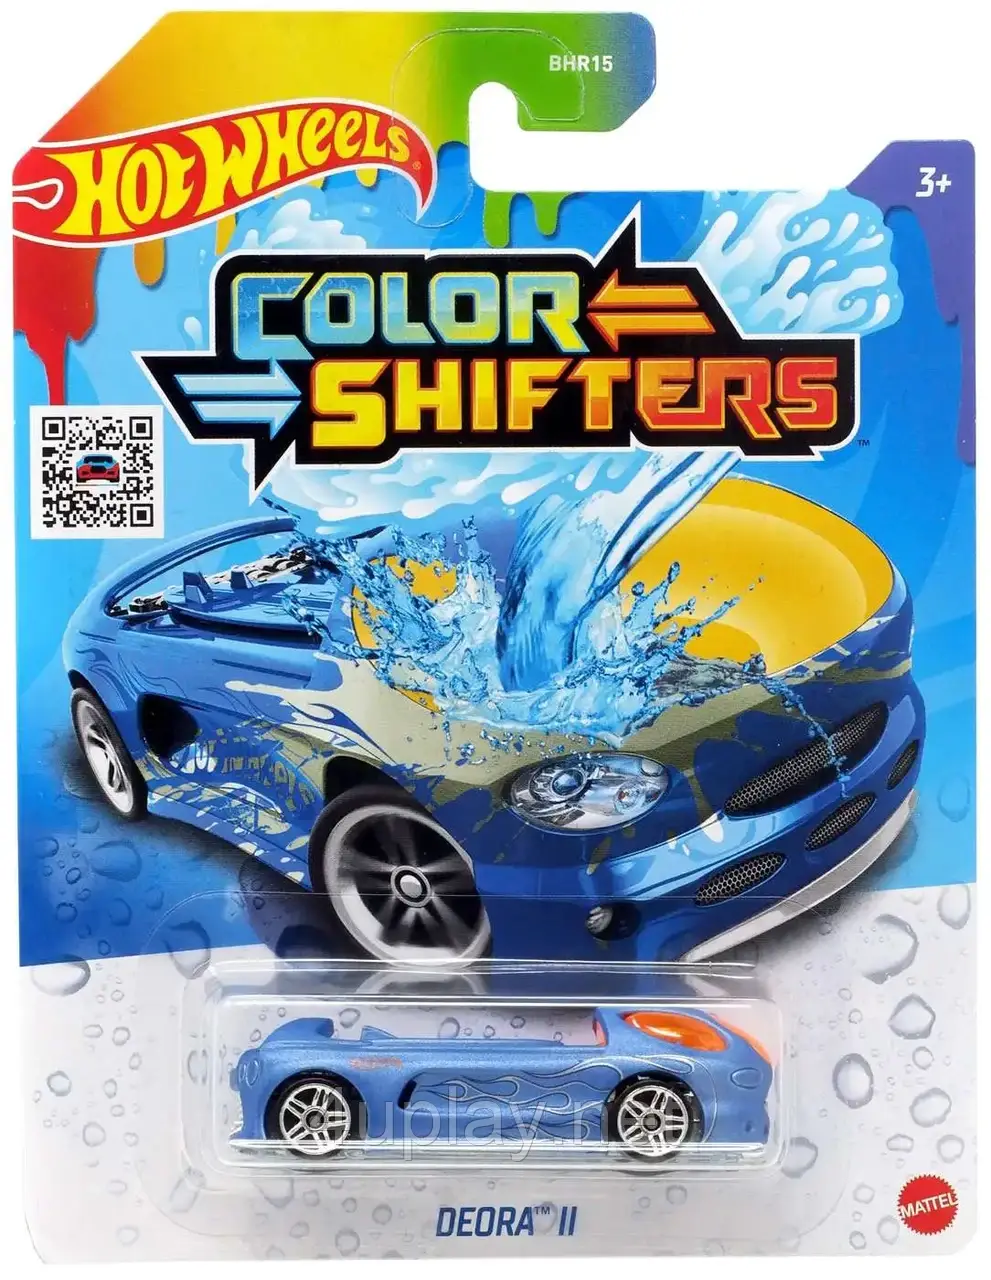 Hot Wheels Color Shifters Deora II. Машинка Хот Вілс, що змінює колір. Безкапотний пікап